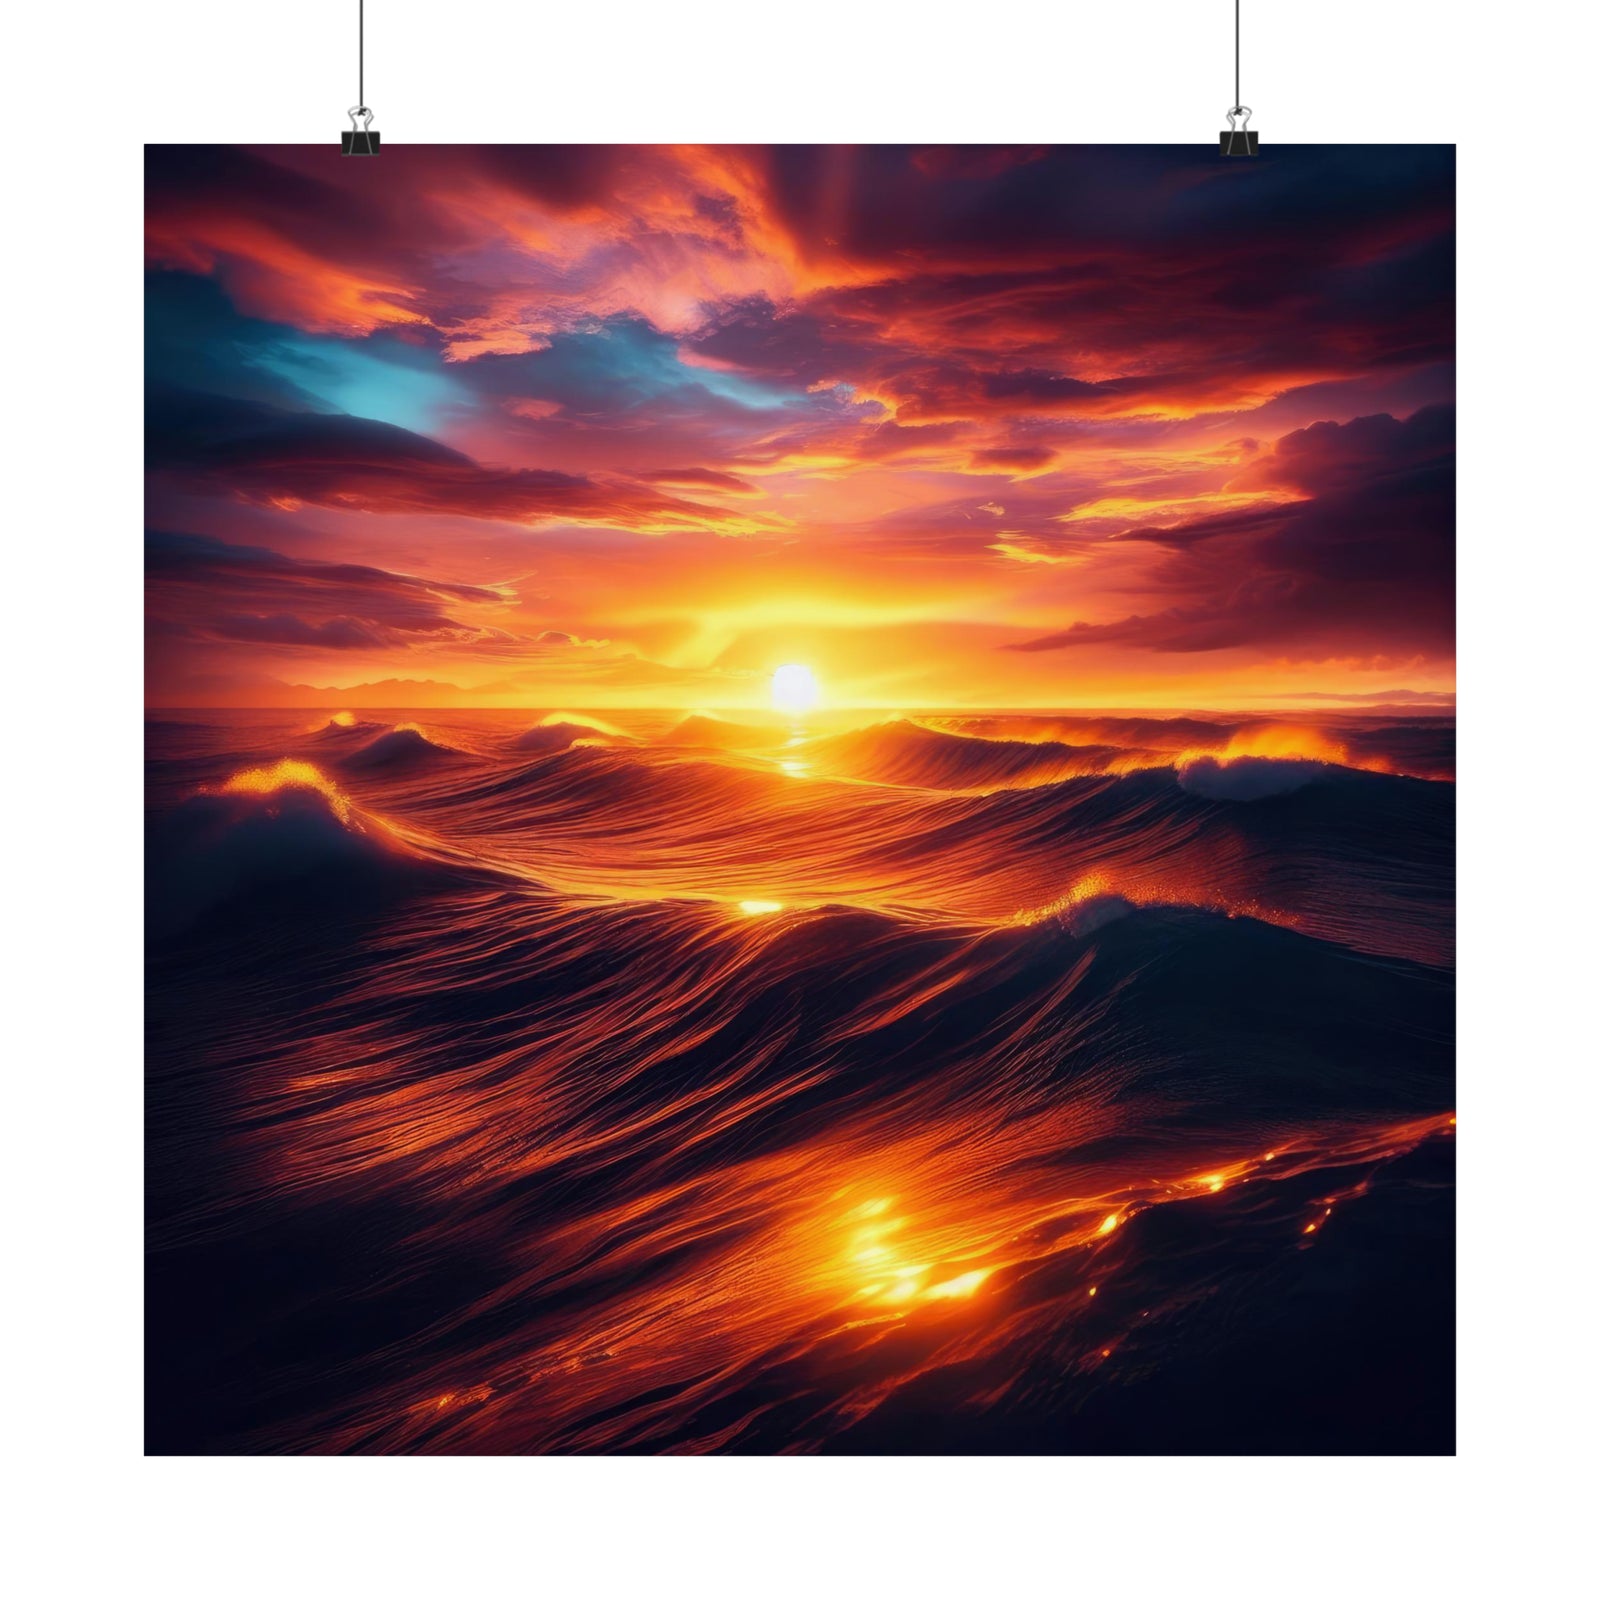 Crimson Skies and Ocean Tides Poster